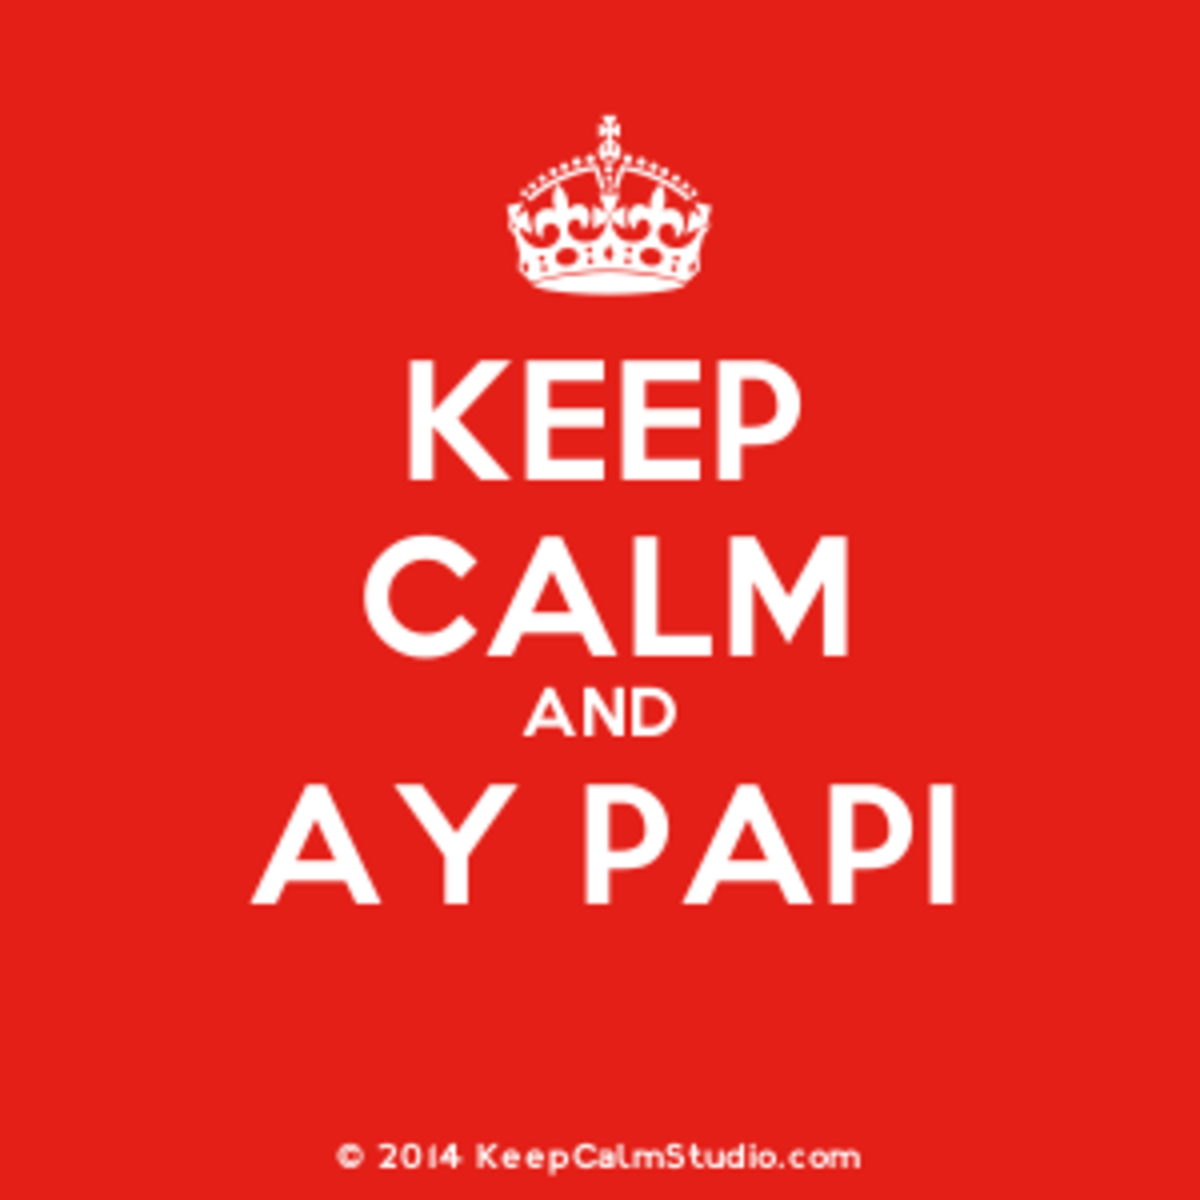 Ay papi meaning